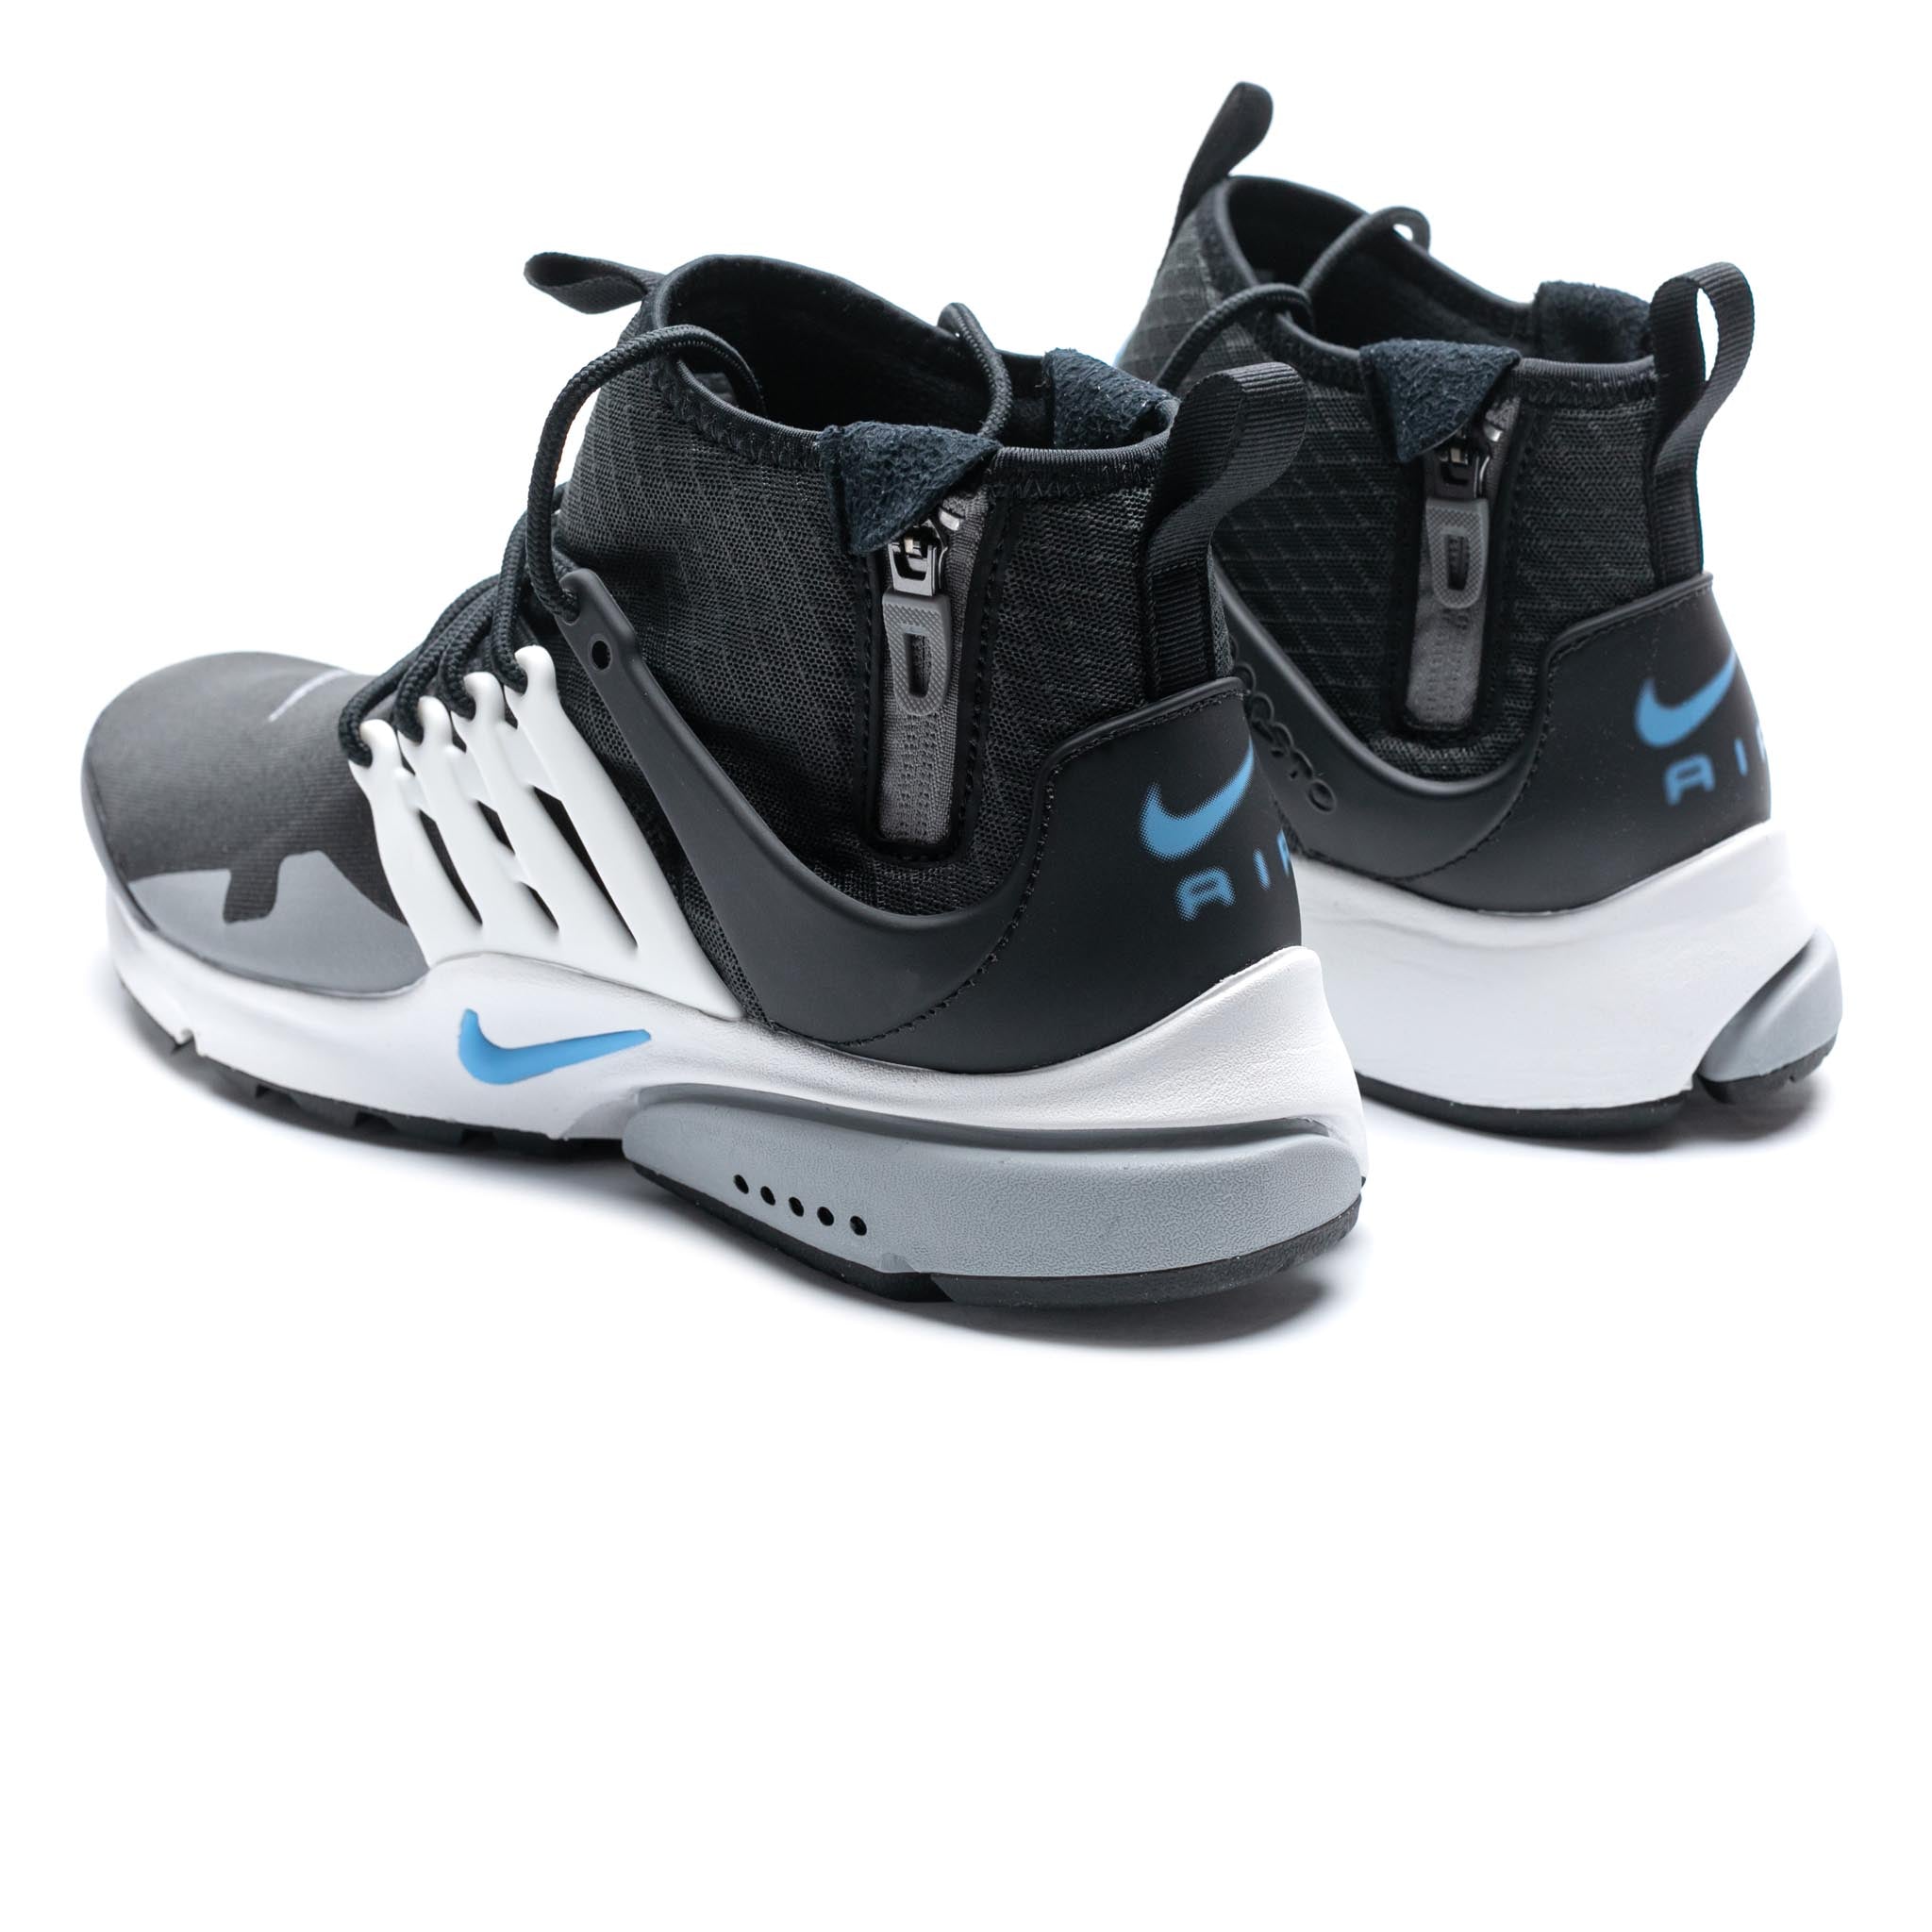 Men's shoes Nike Air Presto Mid Utility Anthracite/ University Blue-Summit  White